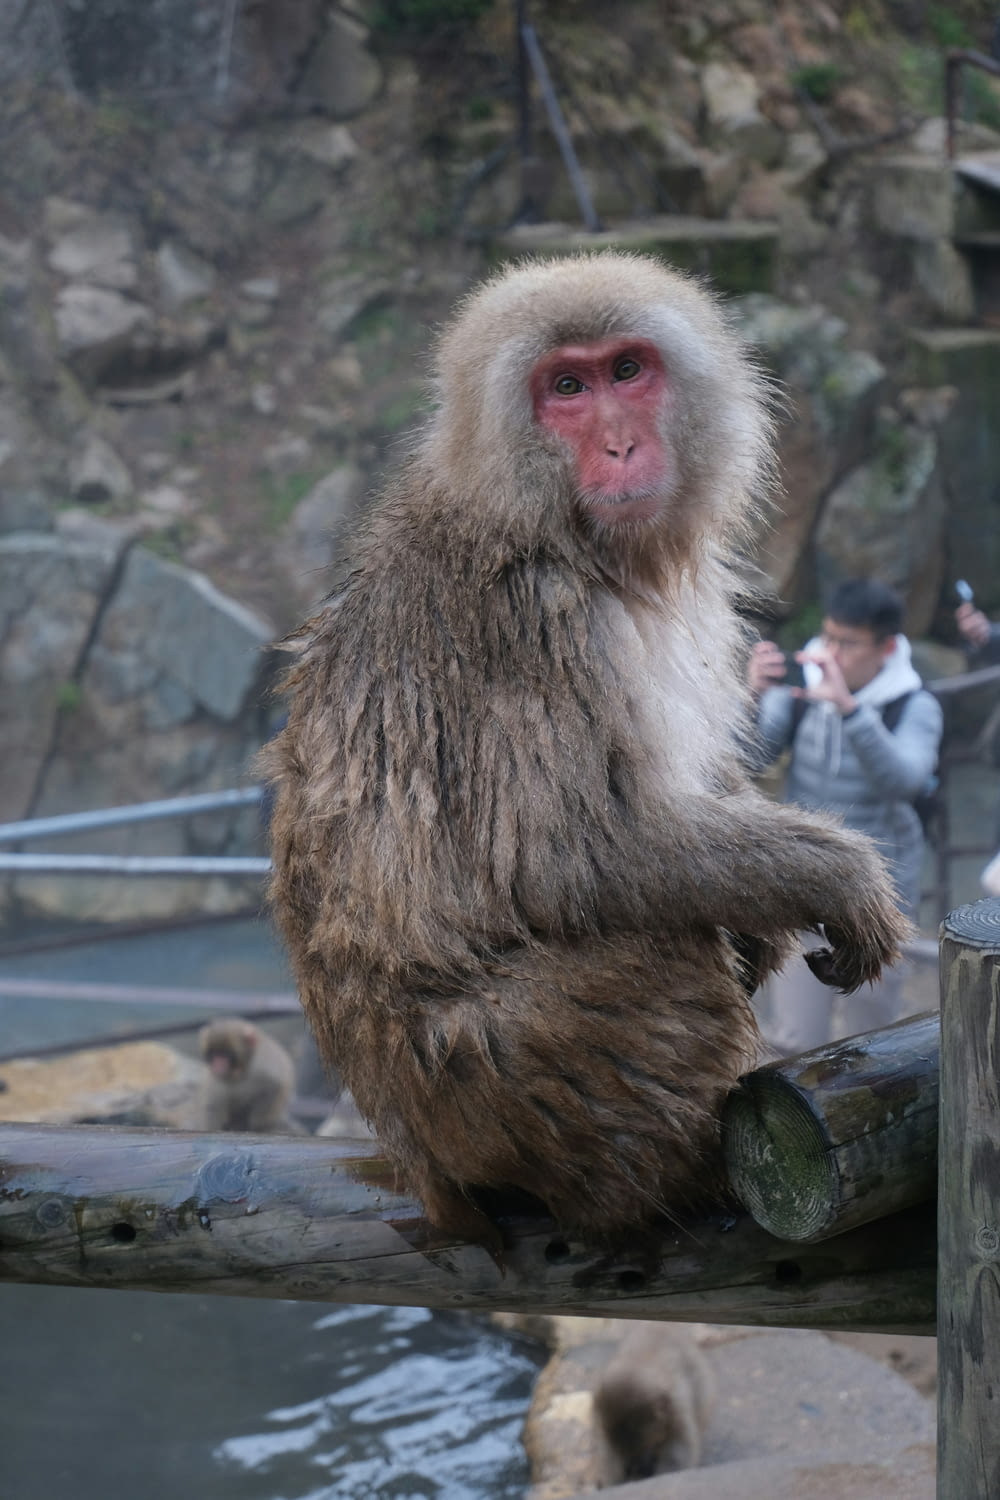 a monkey sitting on a log in a zoo